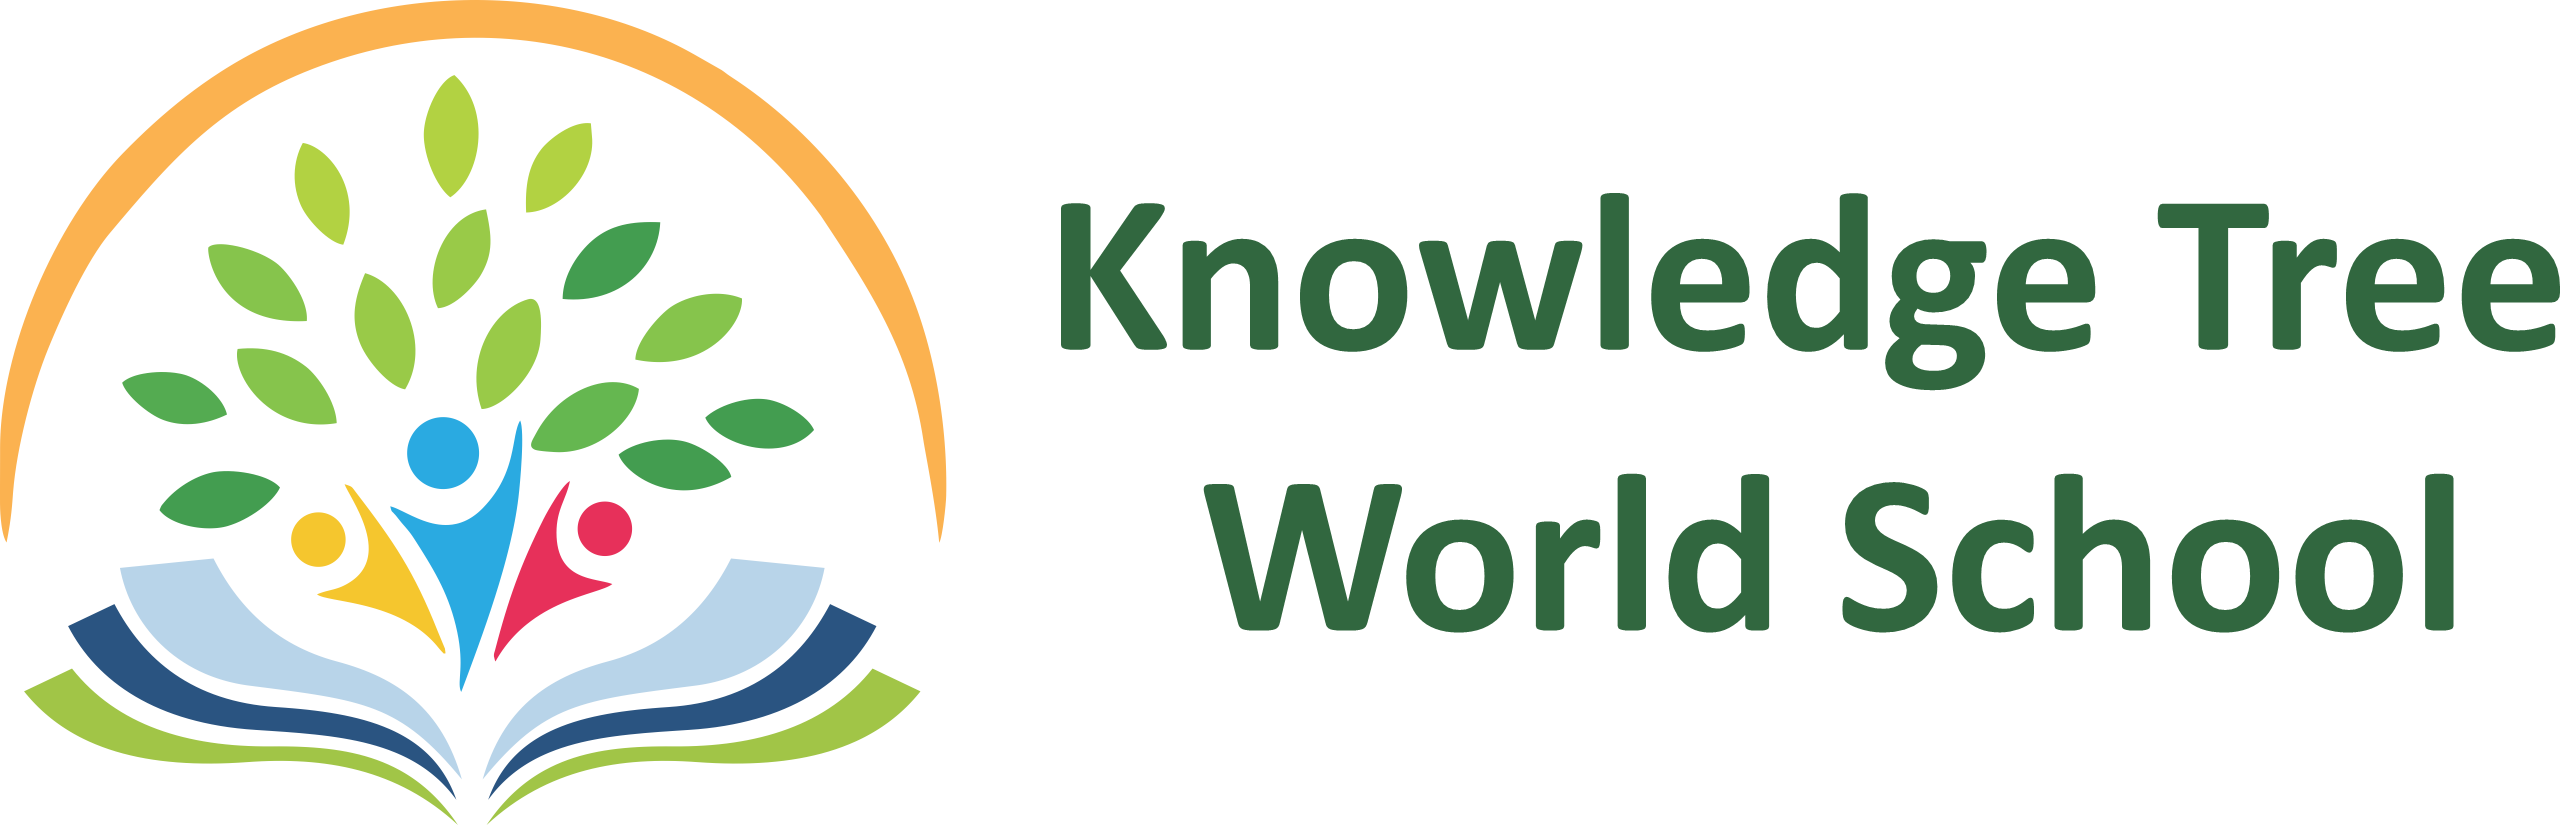 Knowledge Tree World School